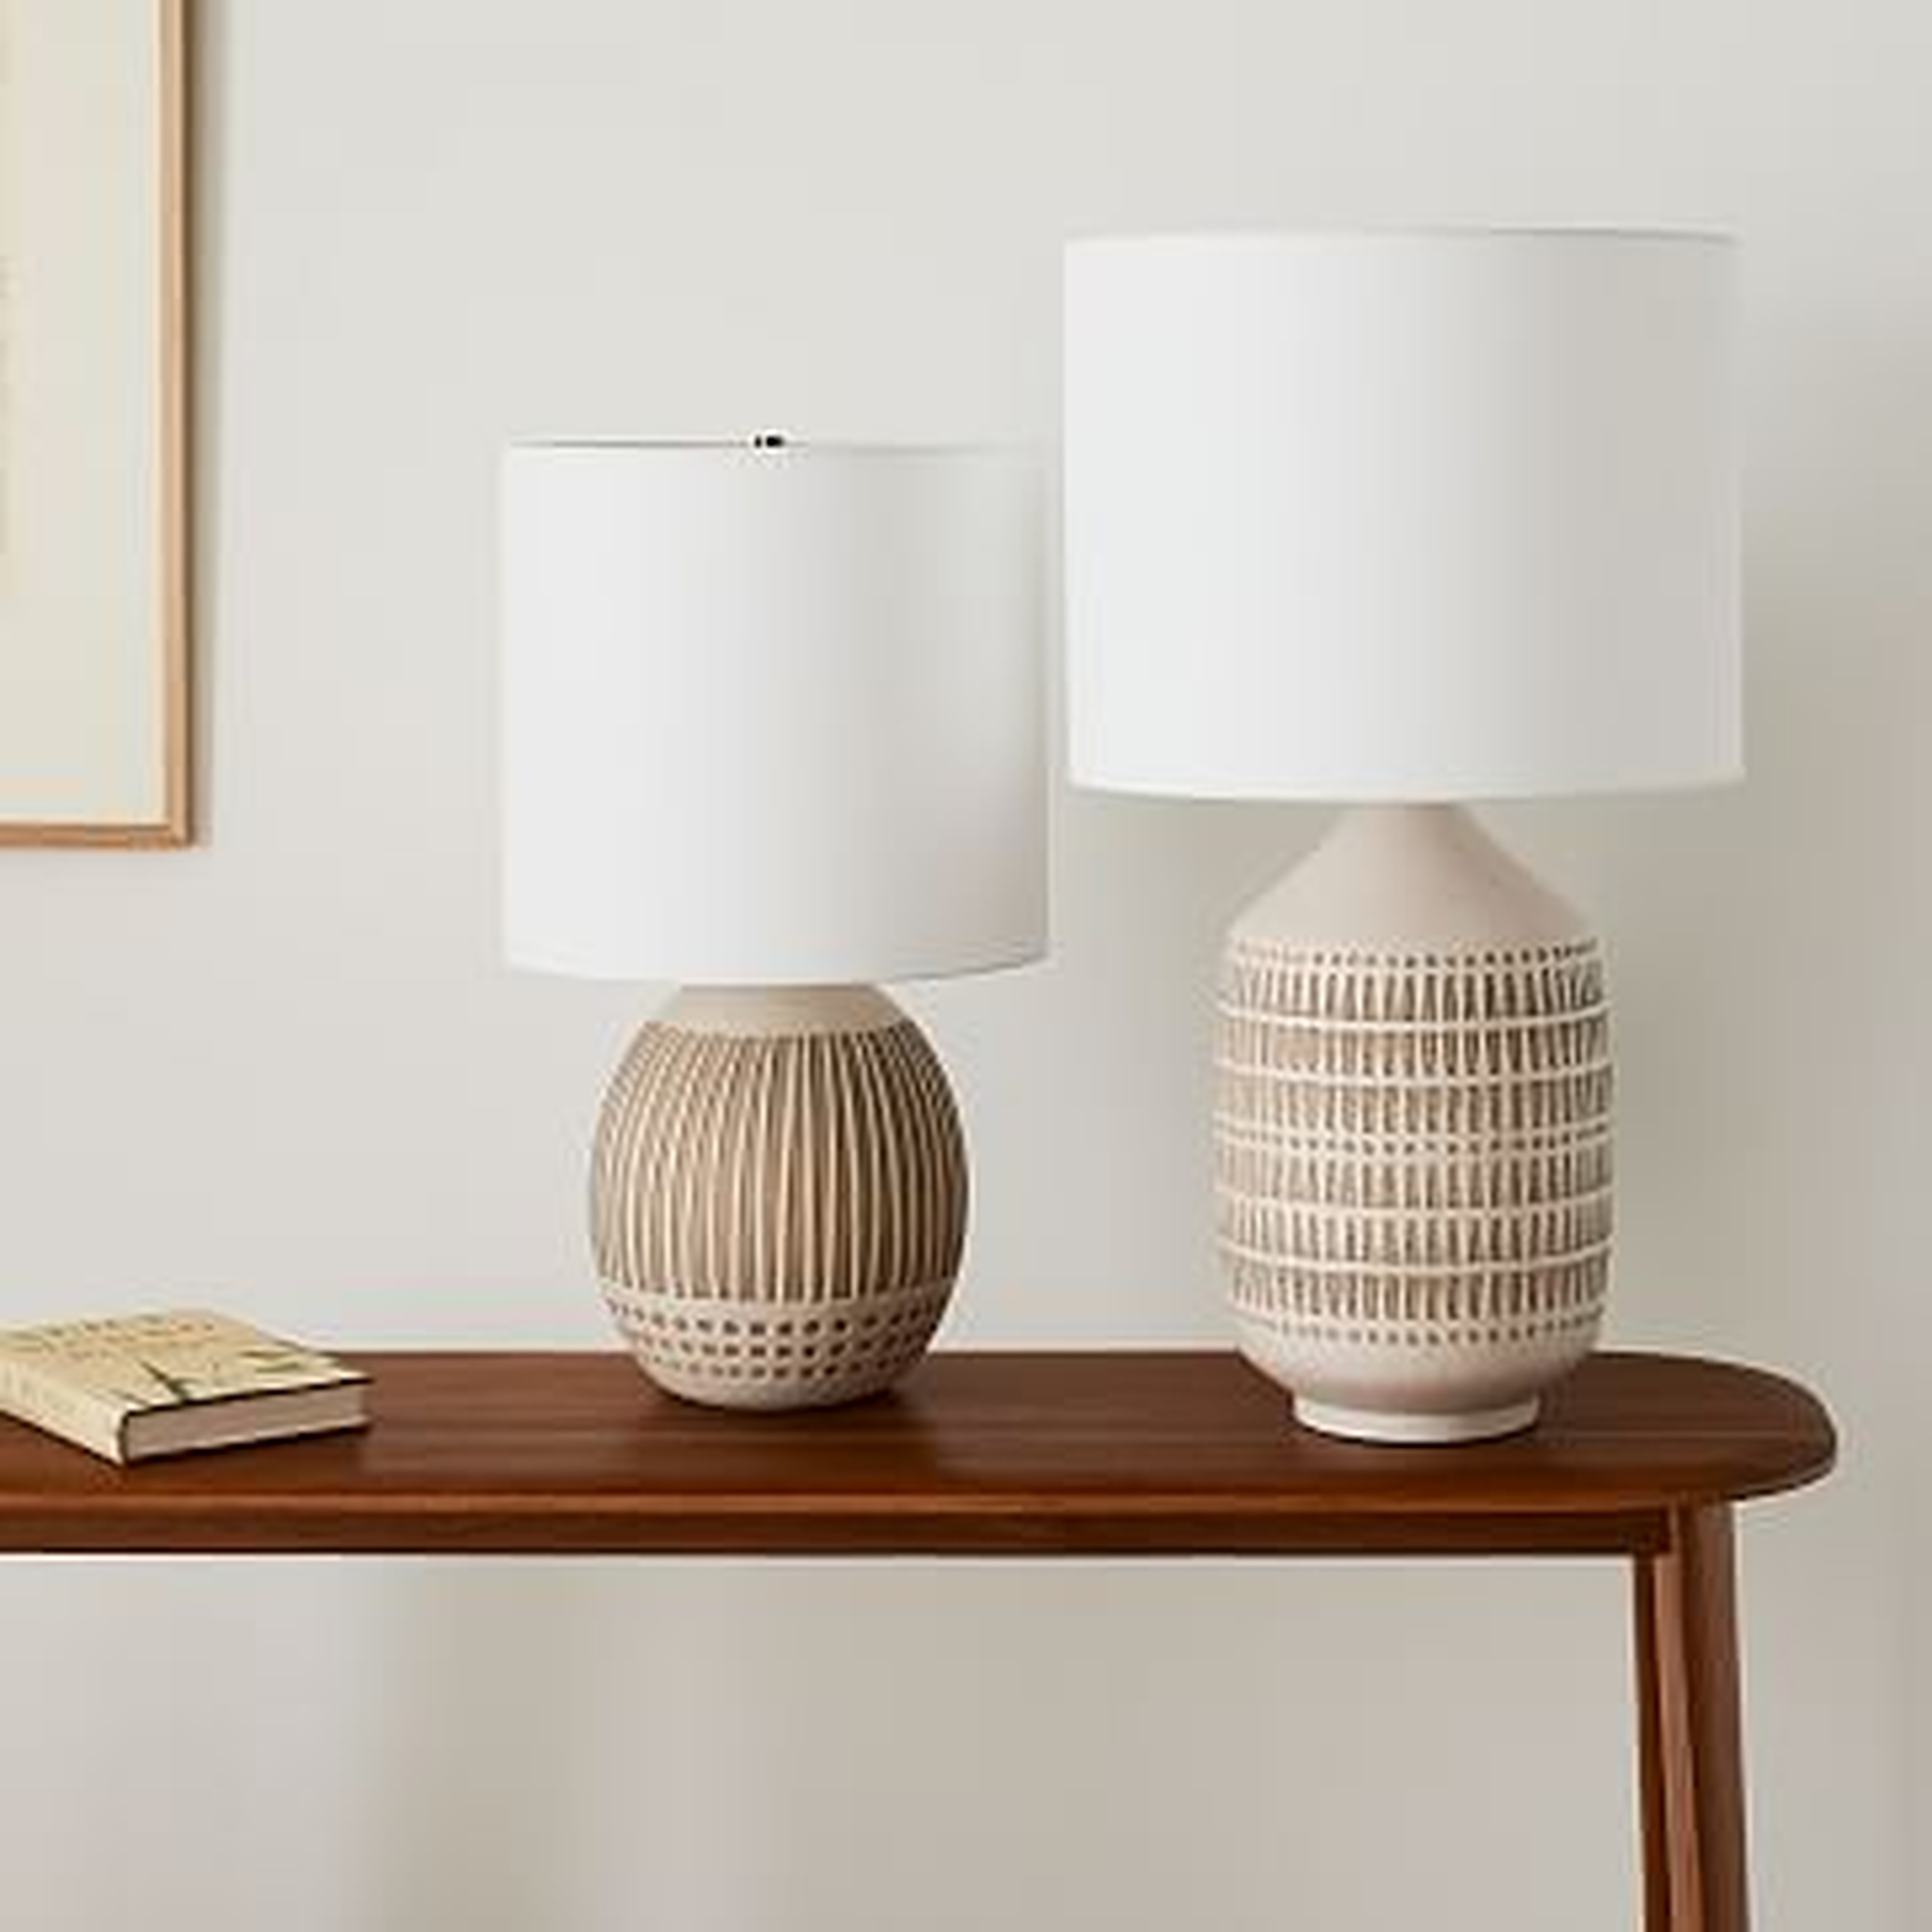 Mojave Ceramic Table Lamp, 26", White/Sand,S/2 - West Elm